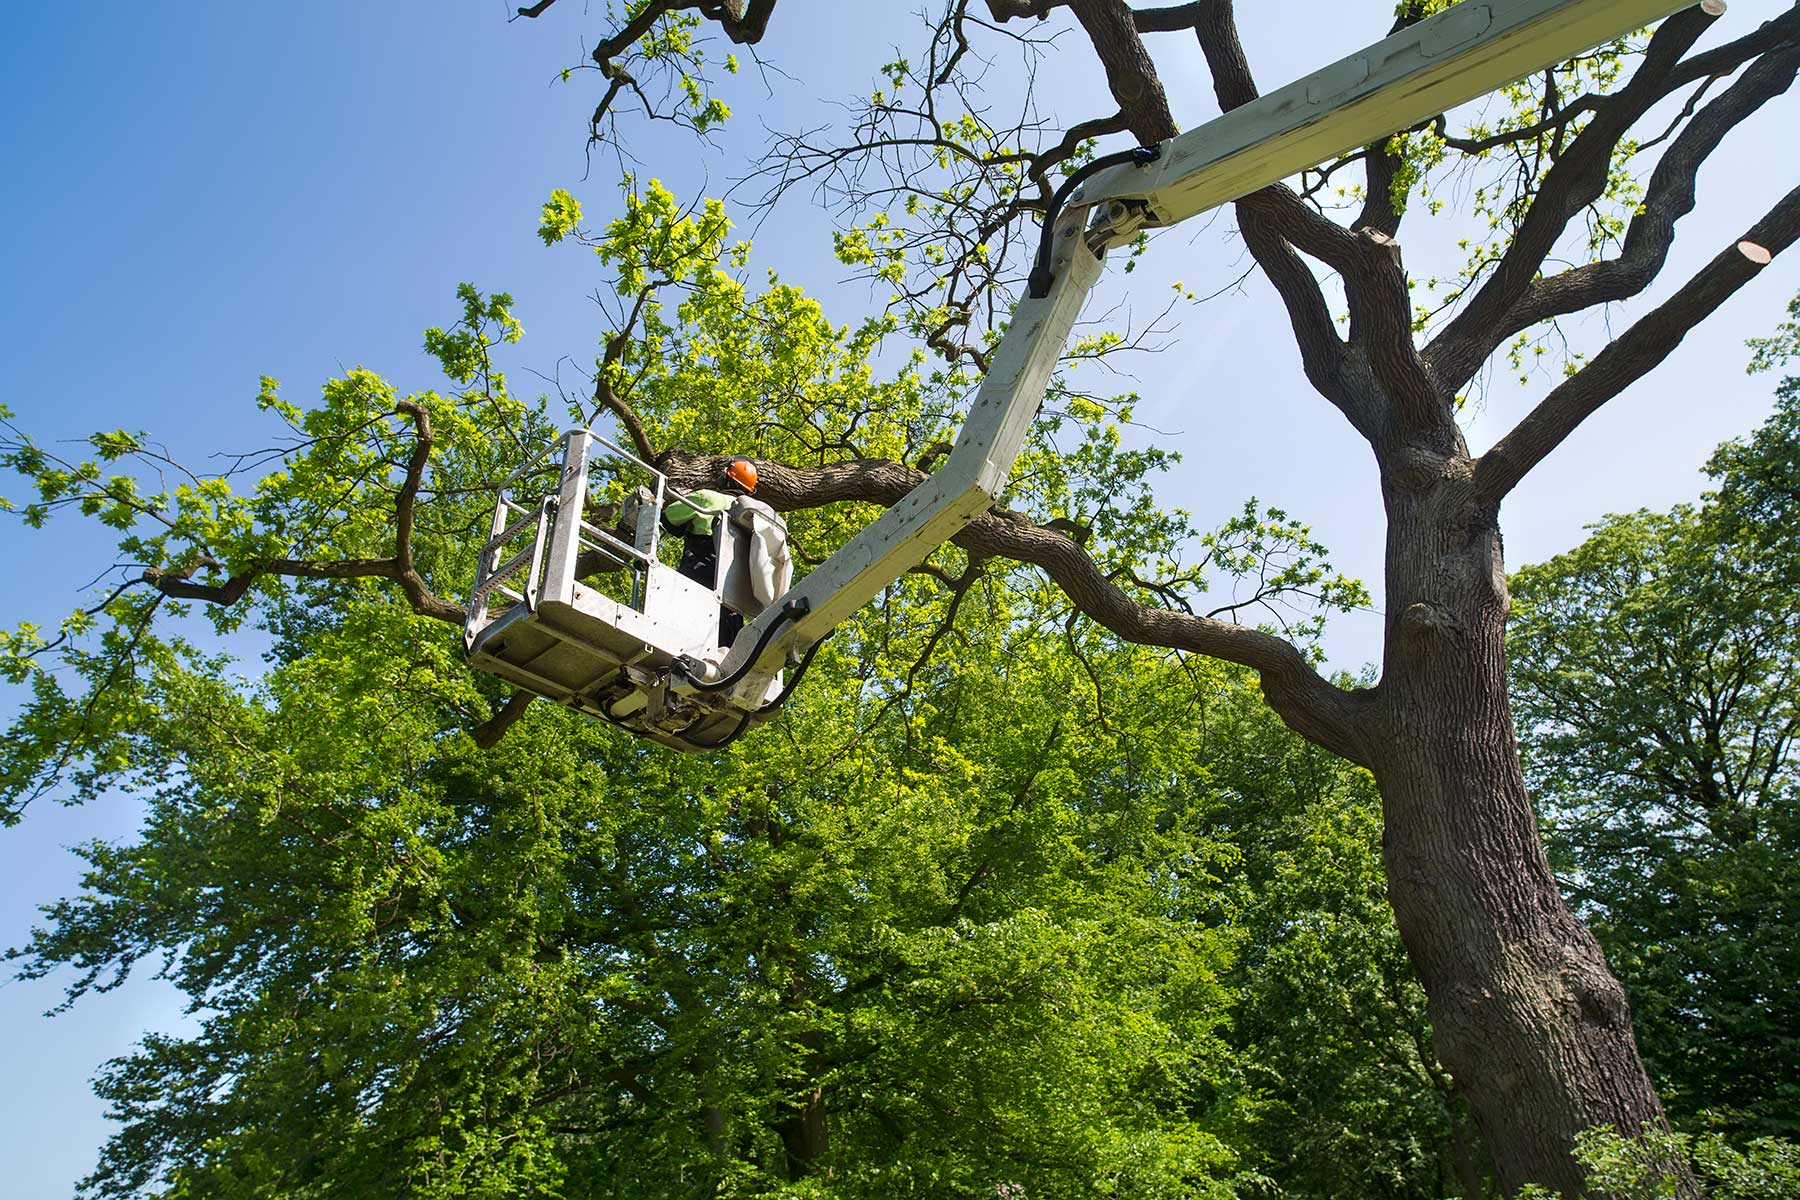 24 Hour Emergency Tree Service